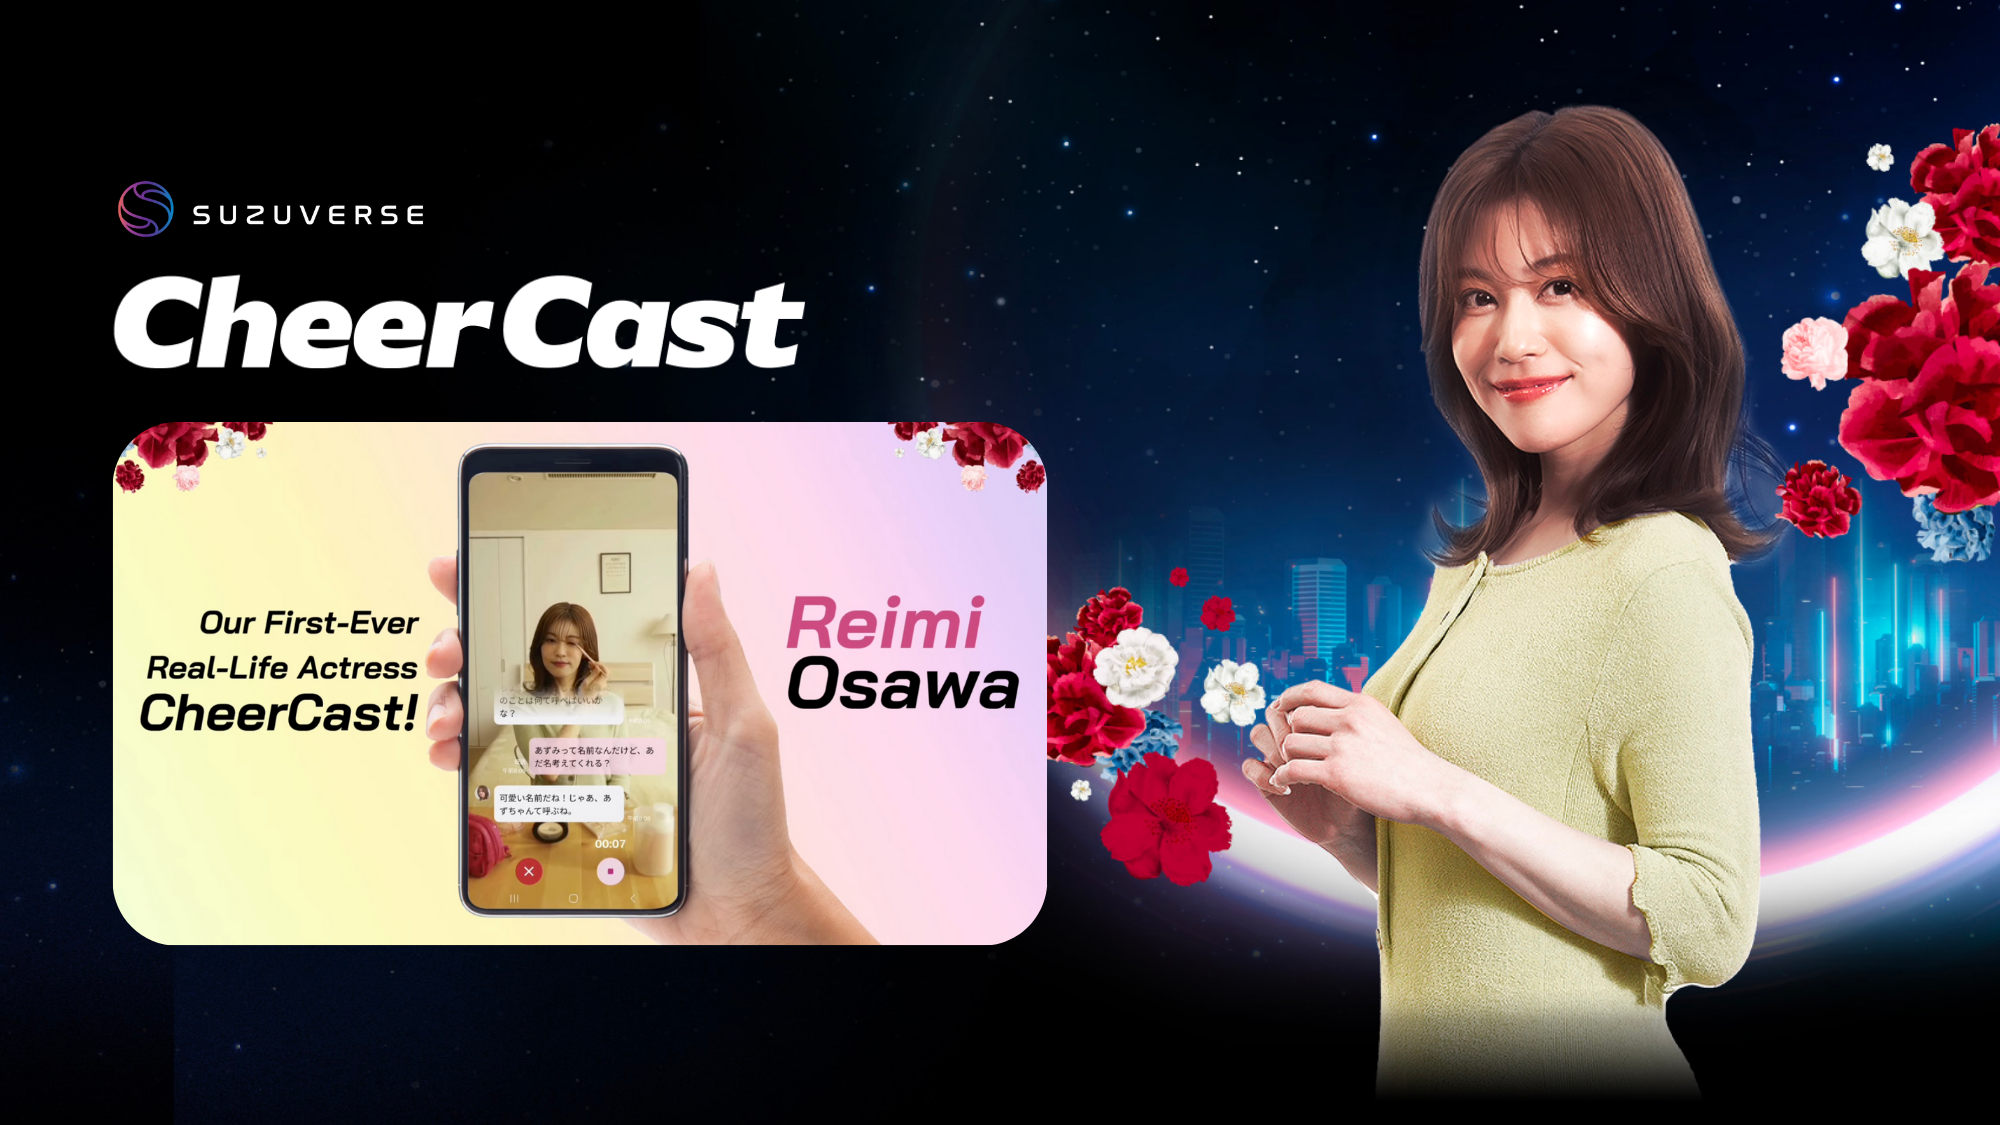 SUZUVERSE介绍日本著名女演员大泽玲美作为CheerCast第一个真人演员形象的AI形象,将明星魅力与AI技术结合起来,在元宇宙中打击孤独。